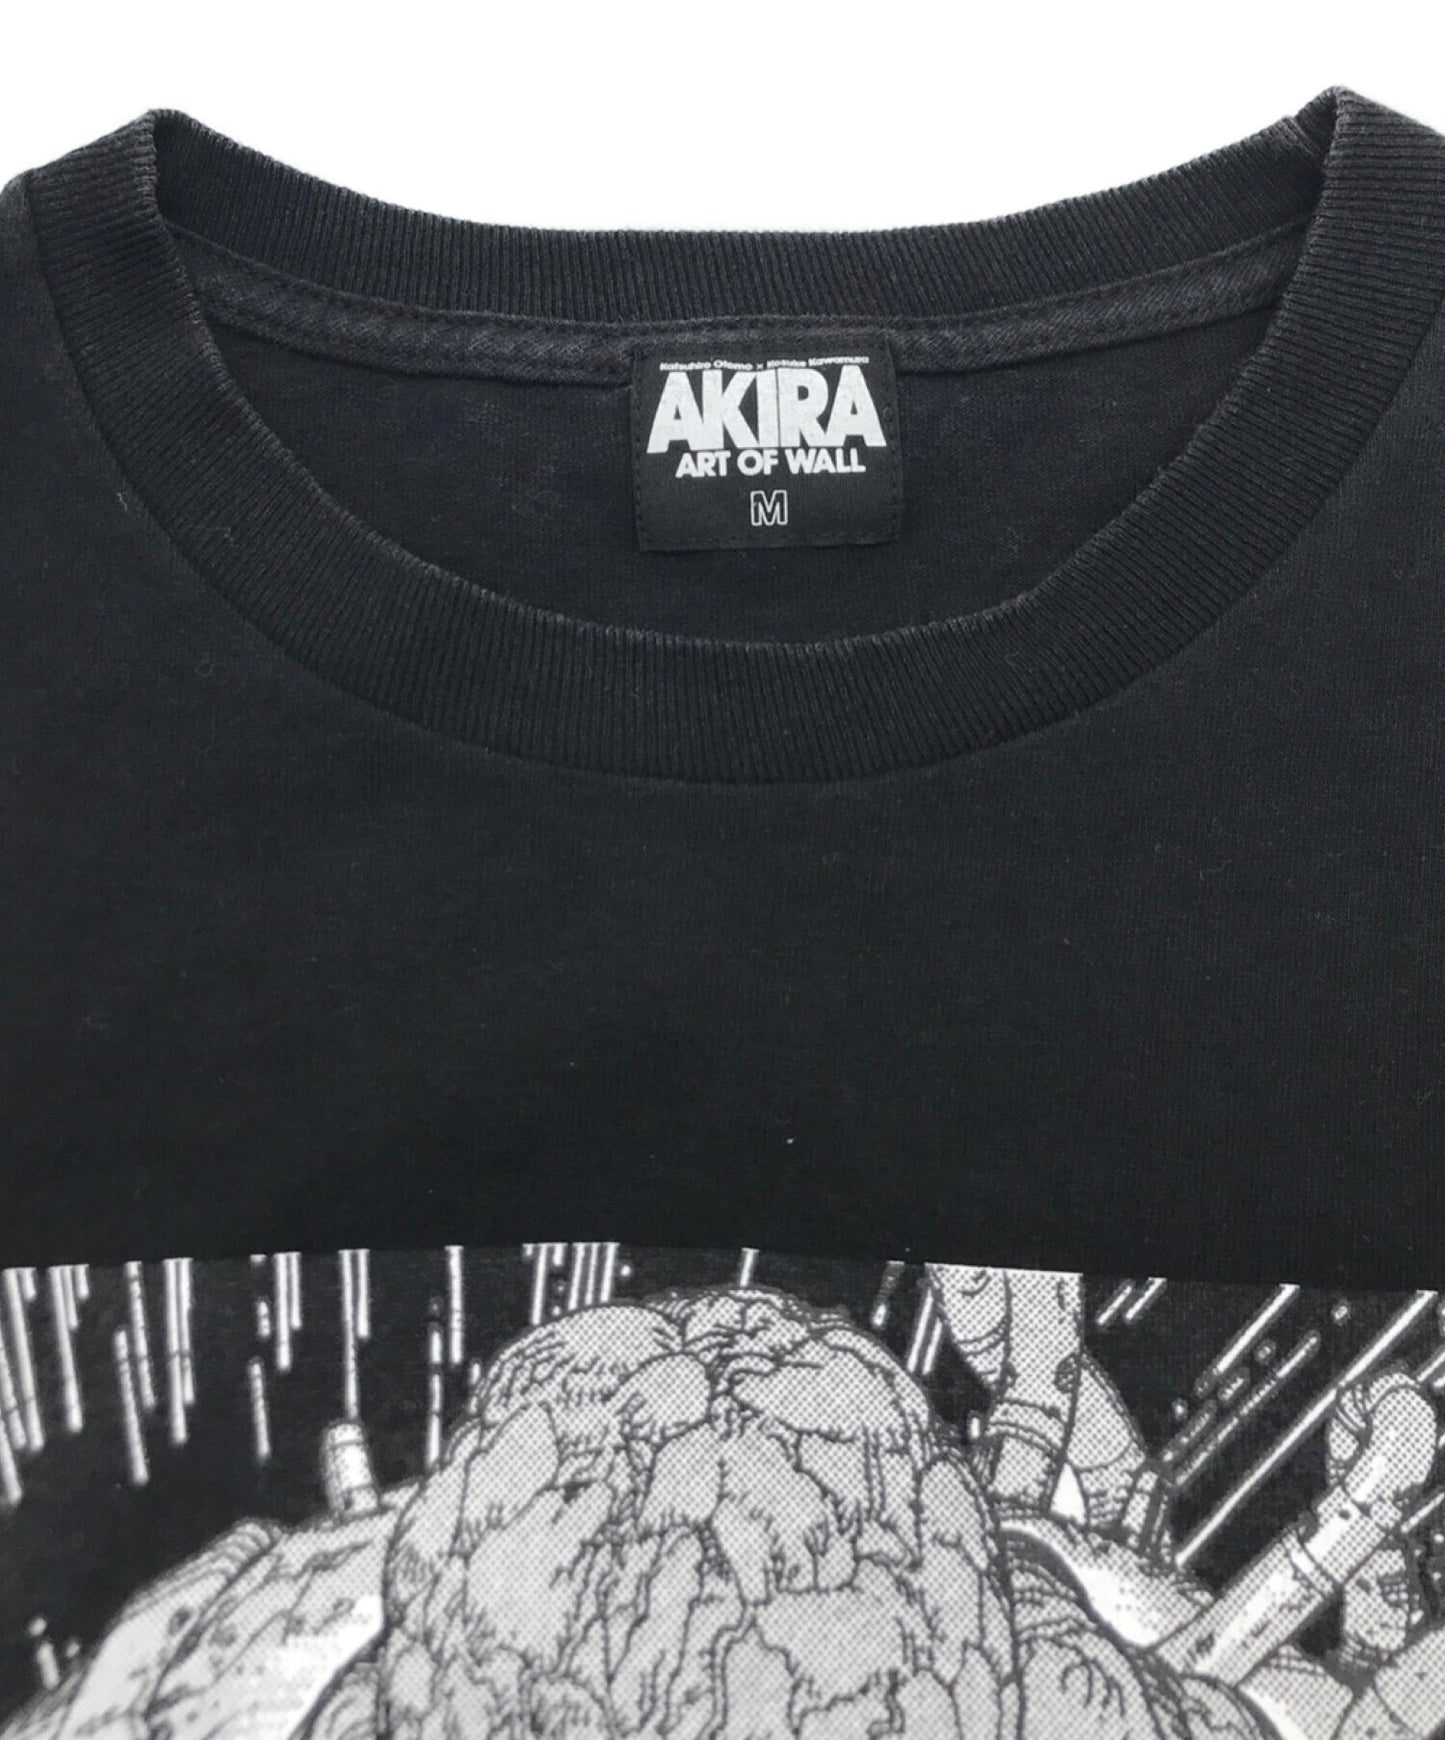 [Pre-owned] AKIRA ART OF WALL Shibuya PARCO LIMITED Printed T-shirt